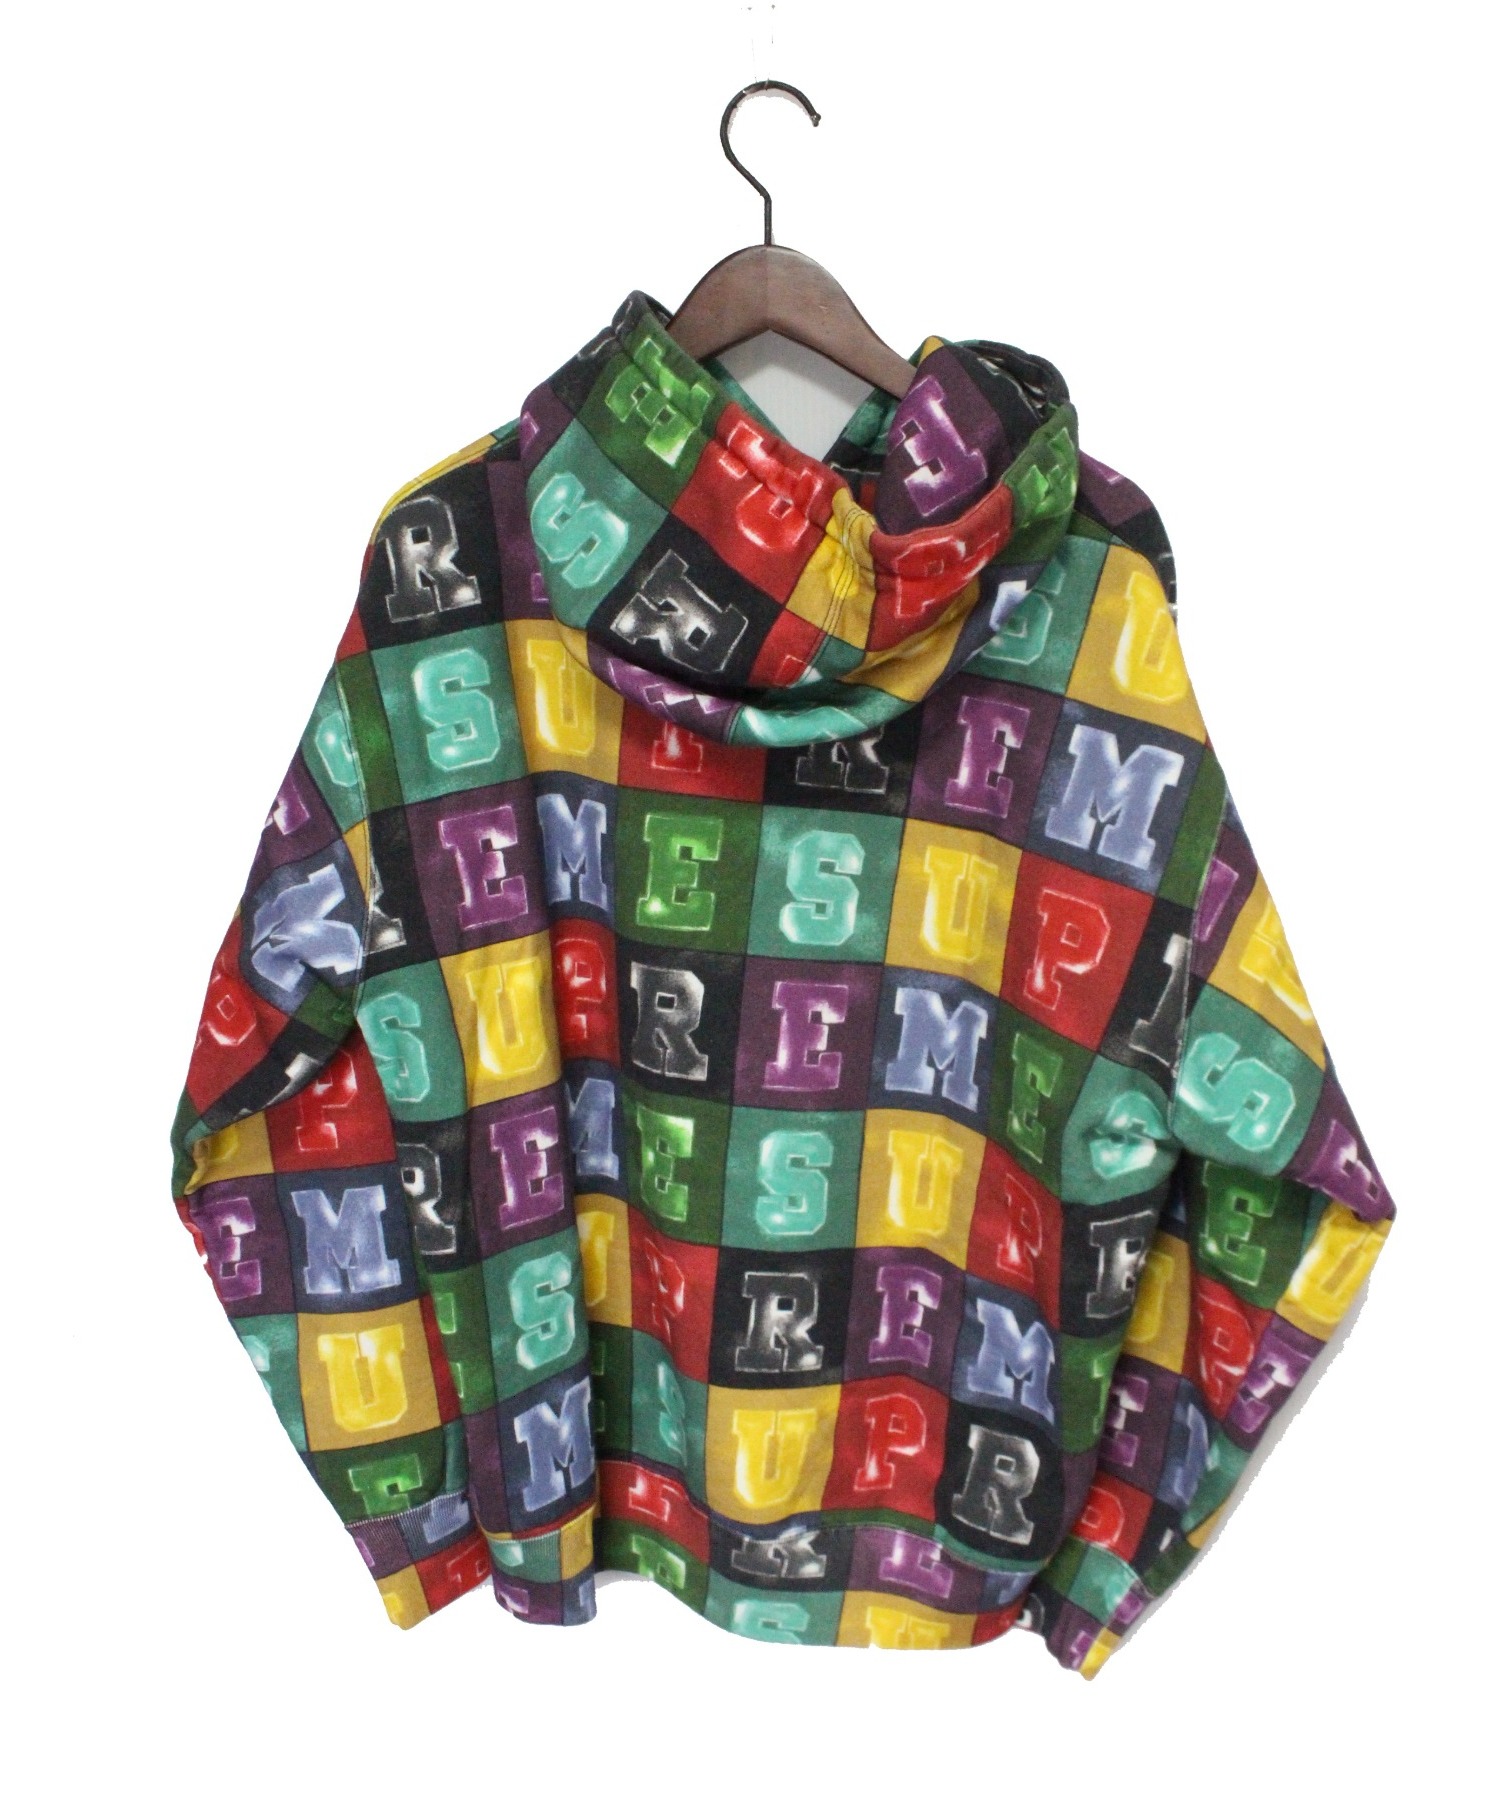 20AW Supreme Blocks Hooded Sweatshirt 新品パーカー